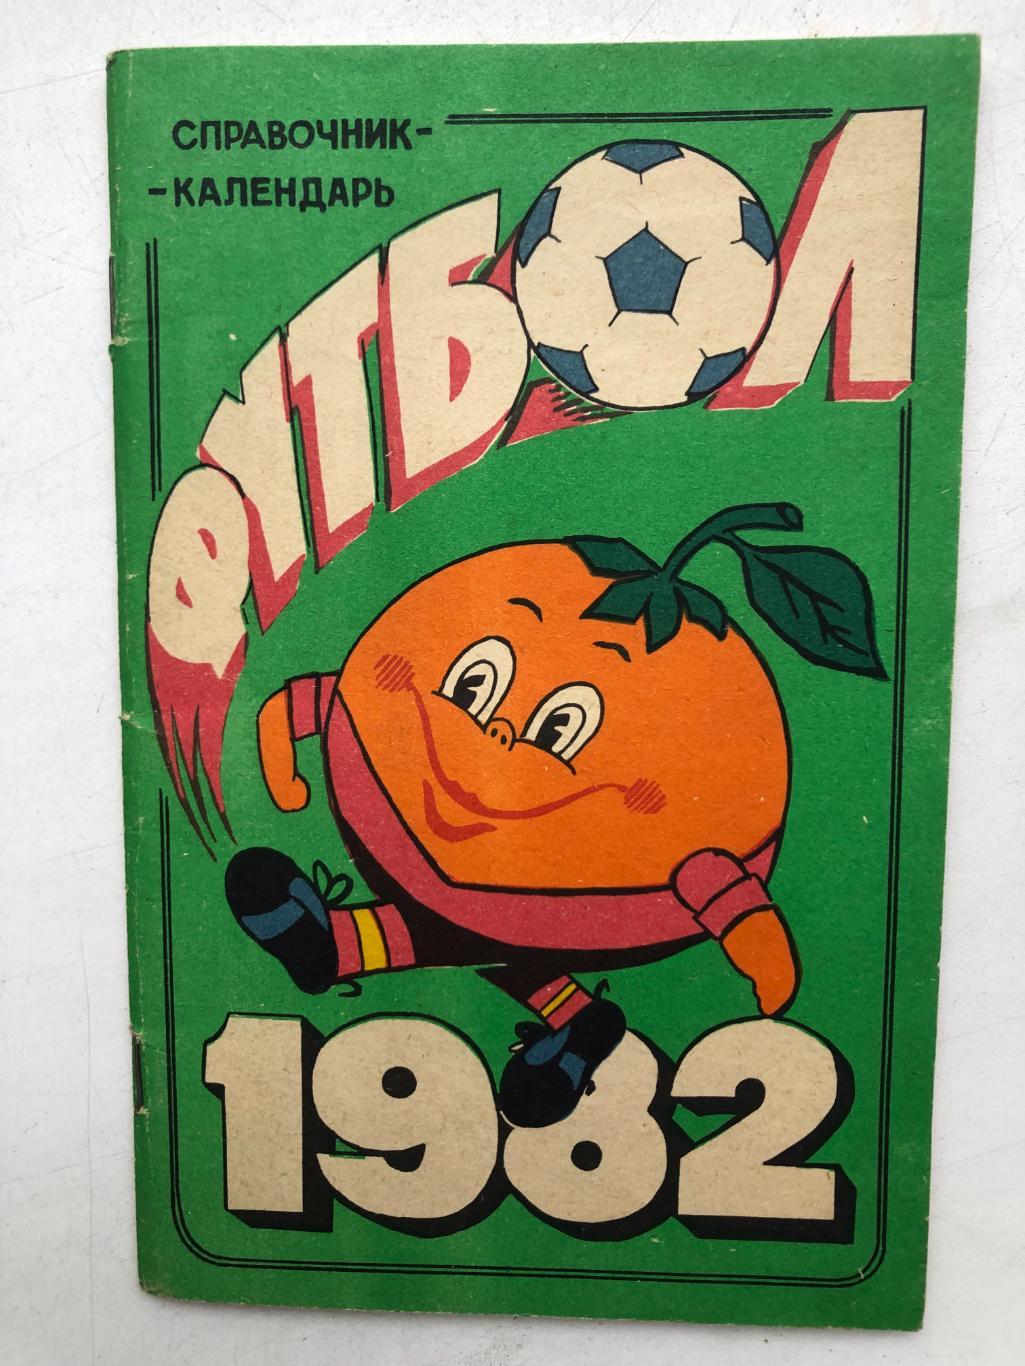 Календарь - справочник Душанбе 1982